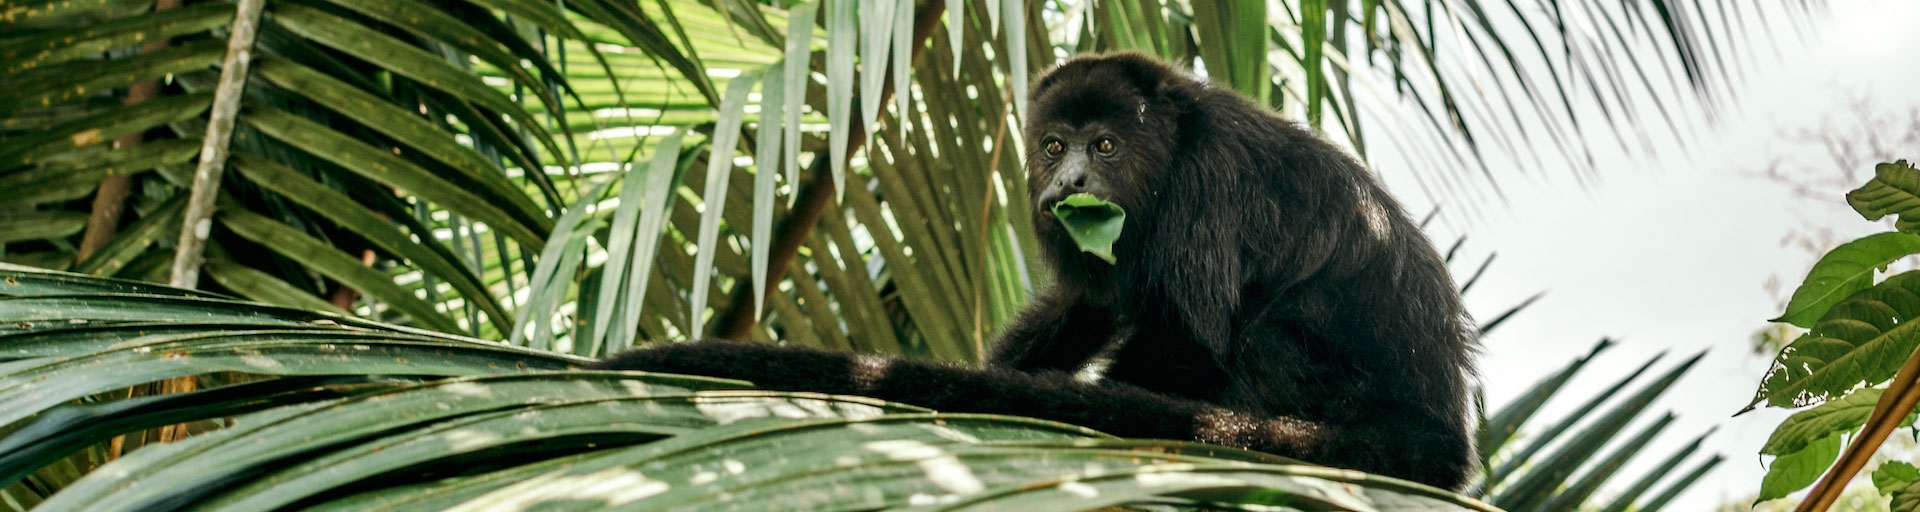 howler monkey enjoying a meal